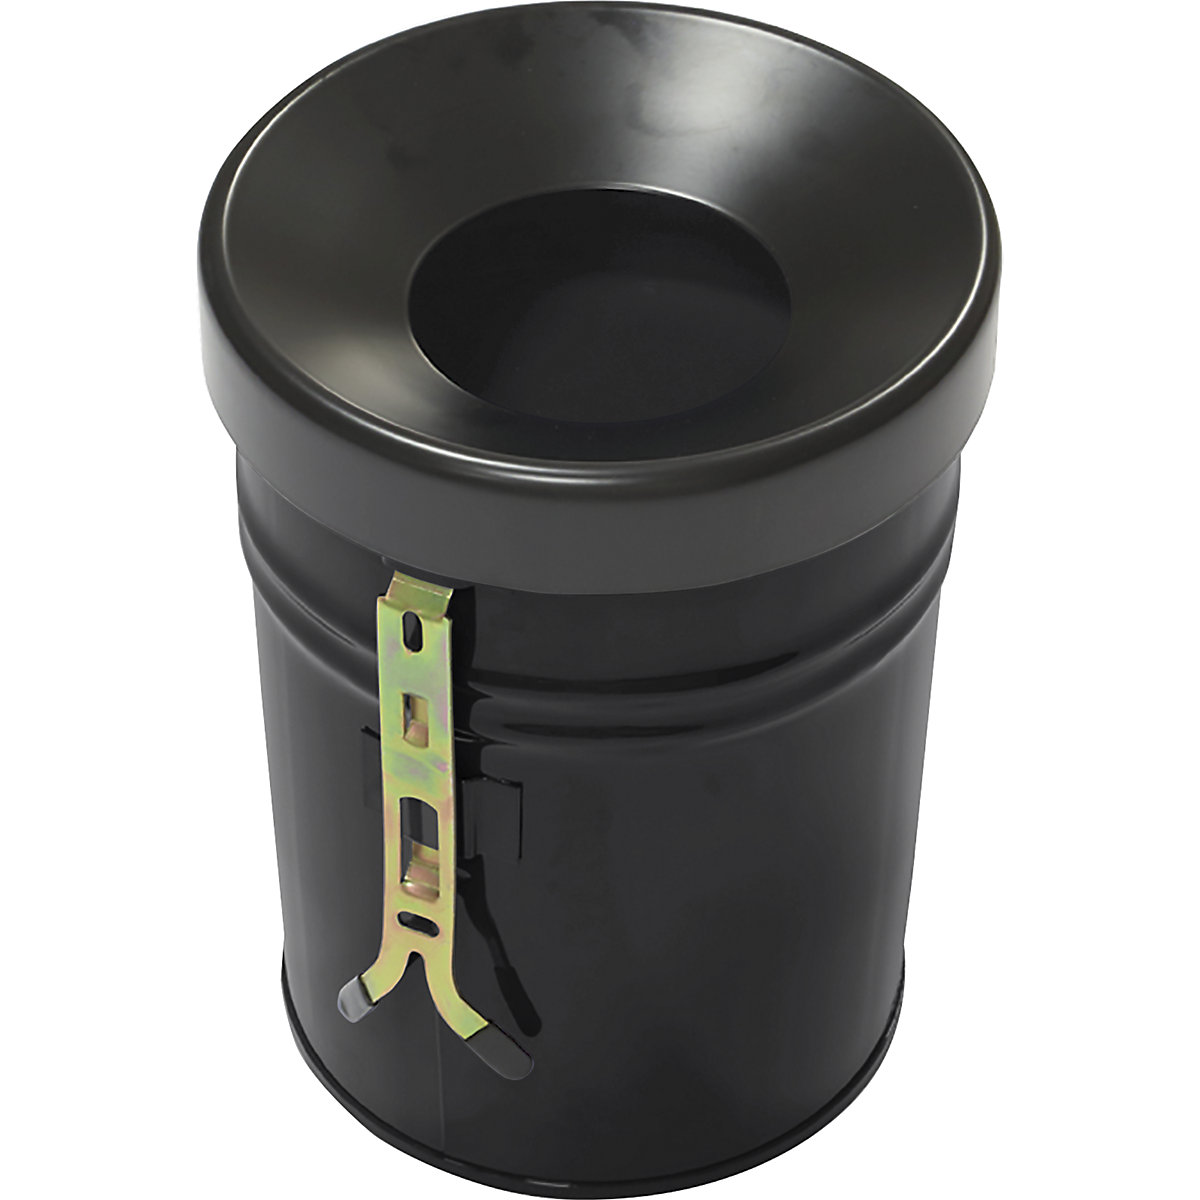 Zidni spremnik za otpad, volumen 24 l, VxØ 370 x 295 mm, u crnoj boji-6